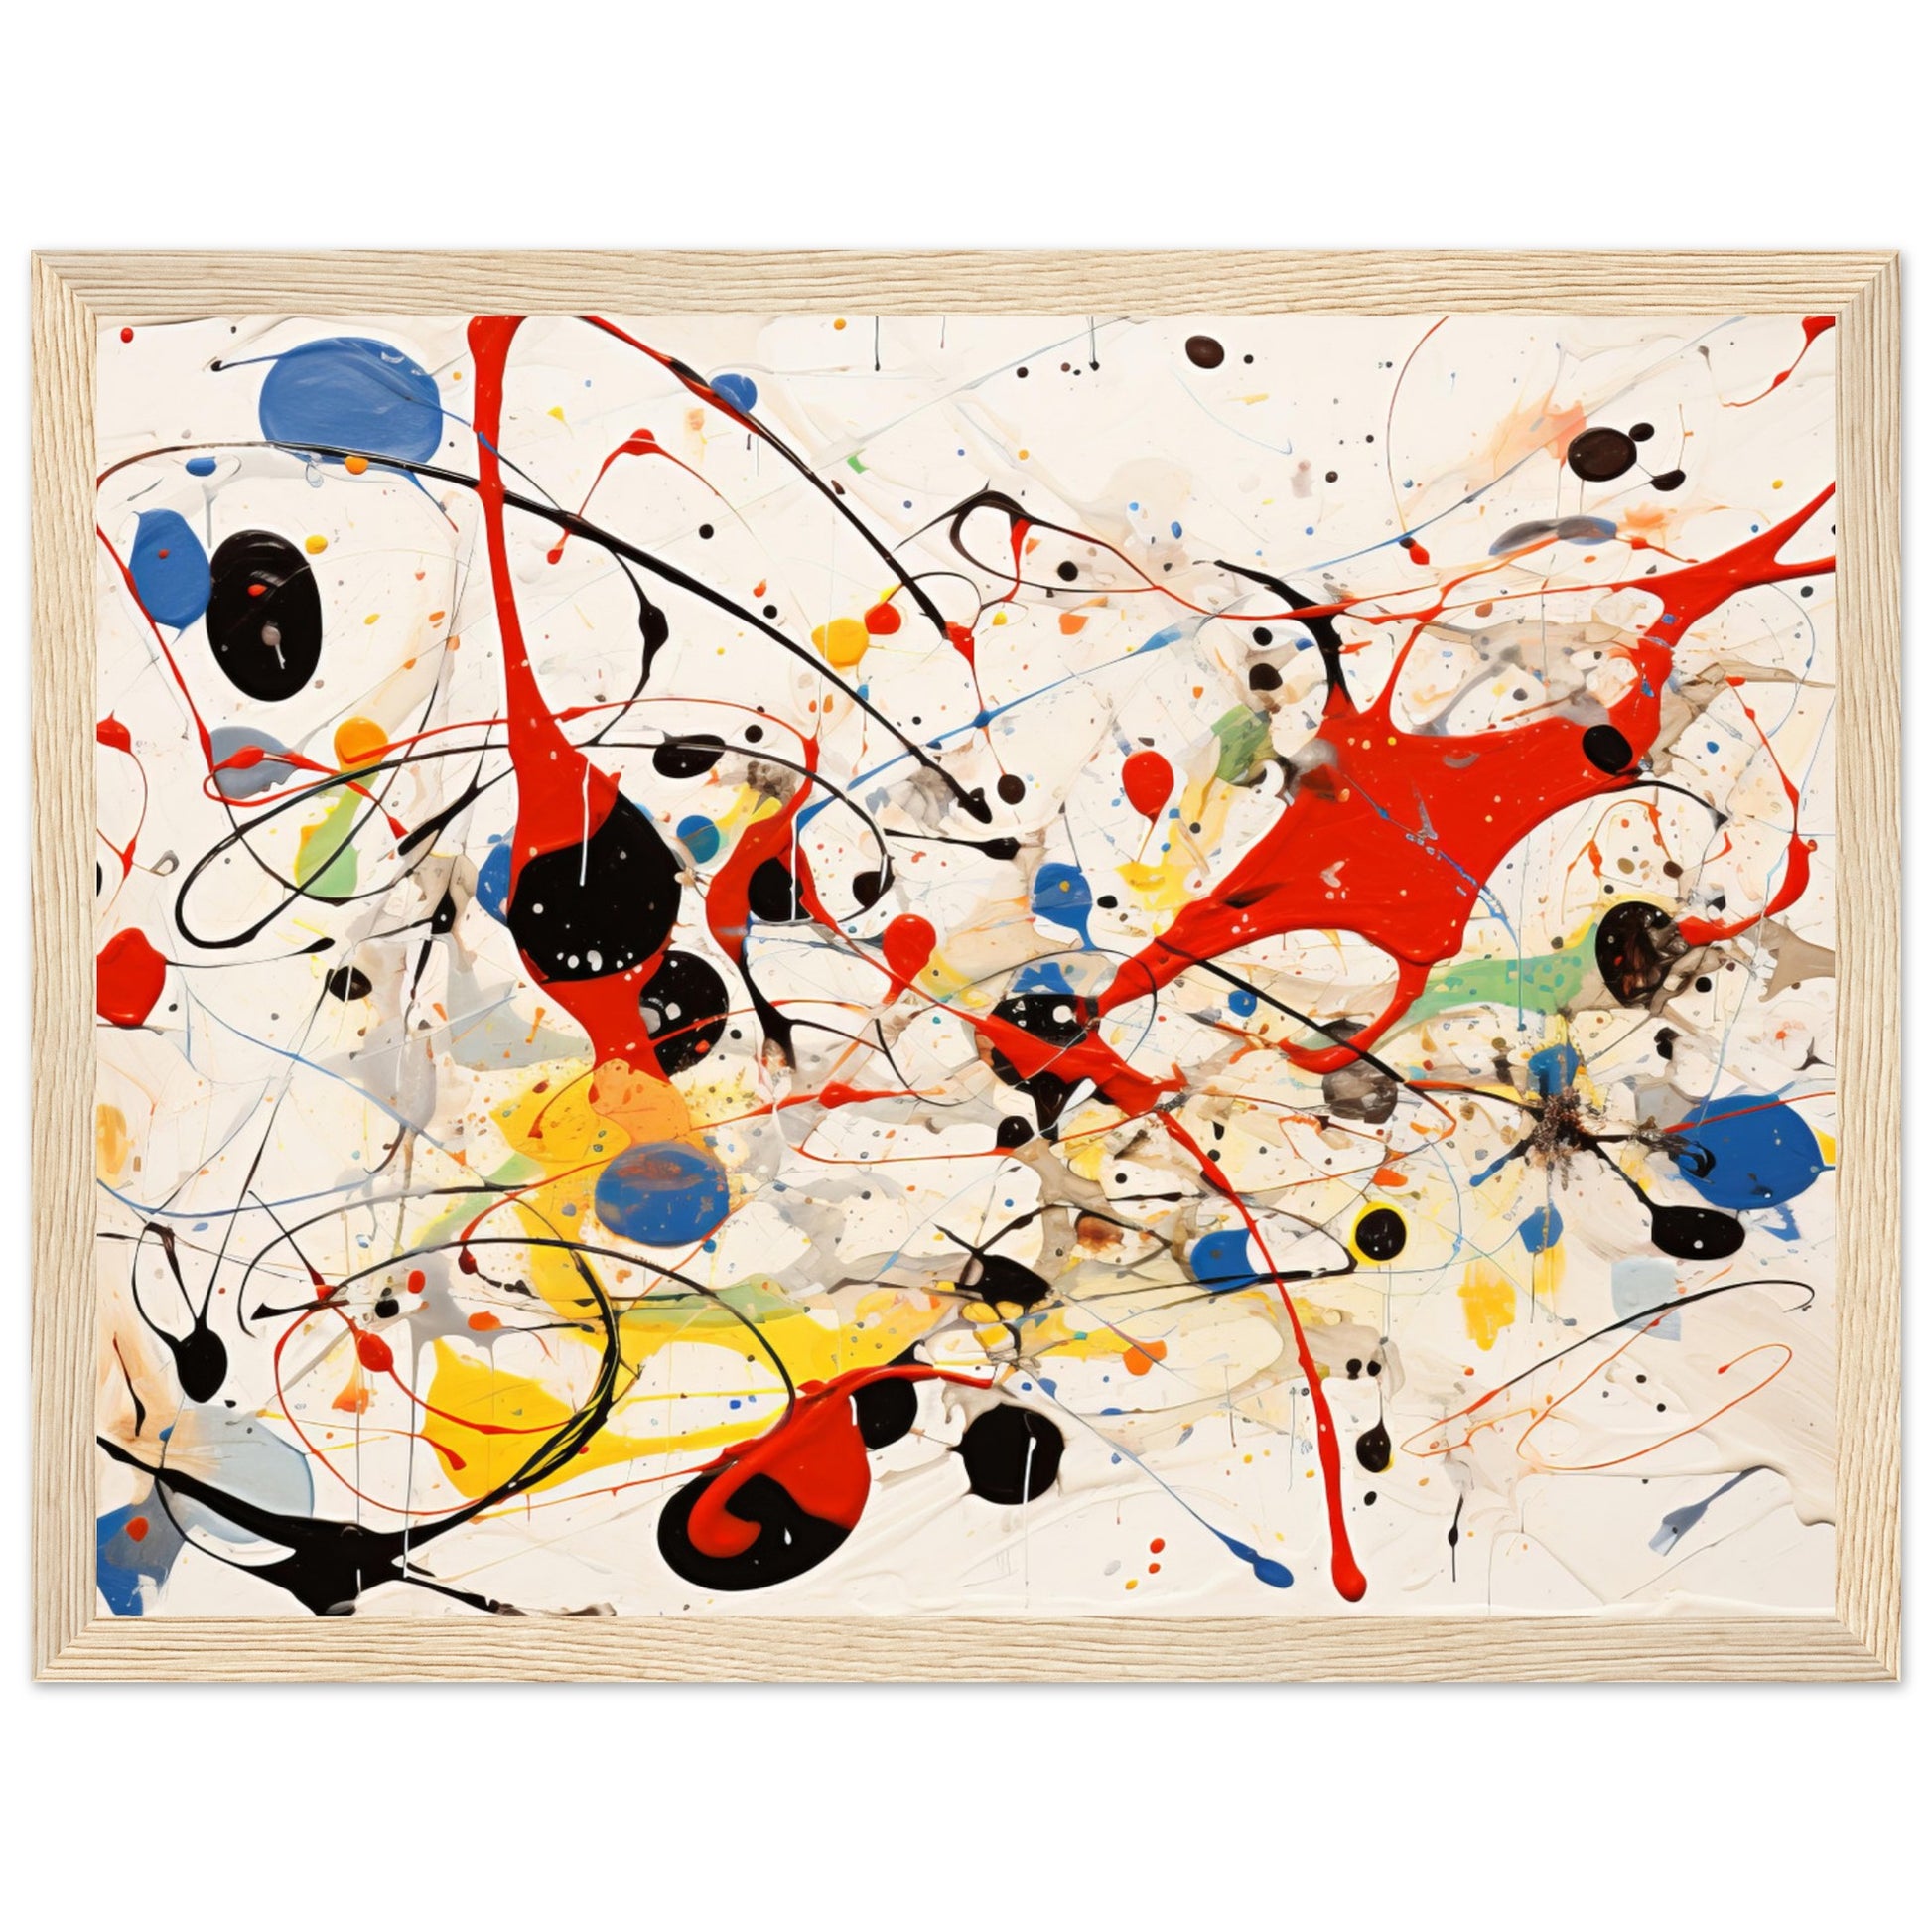 Pollock Abstract #09 - Art Print Wood frame 30x40 cm / 12x16"